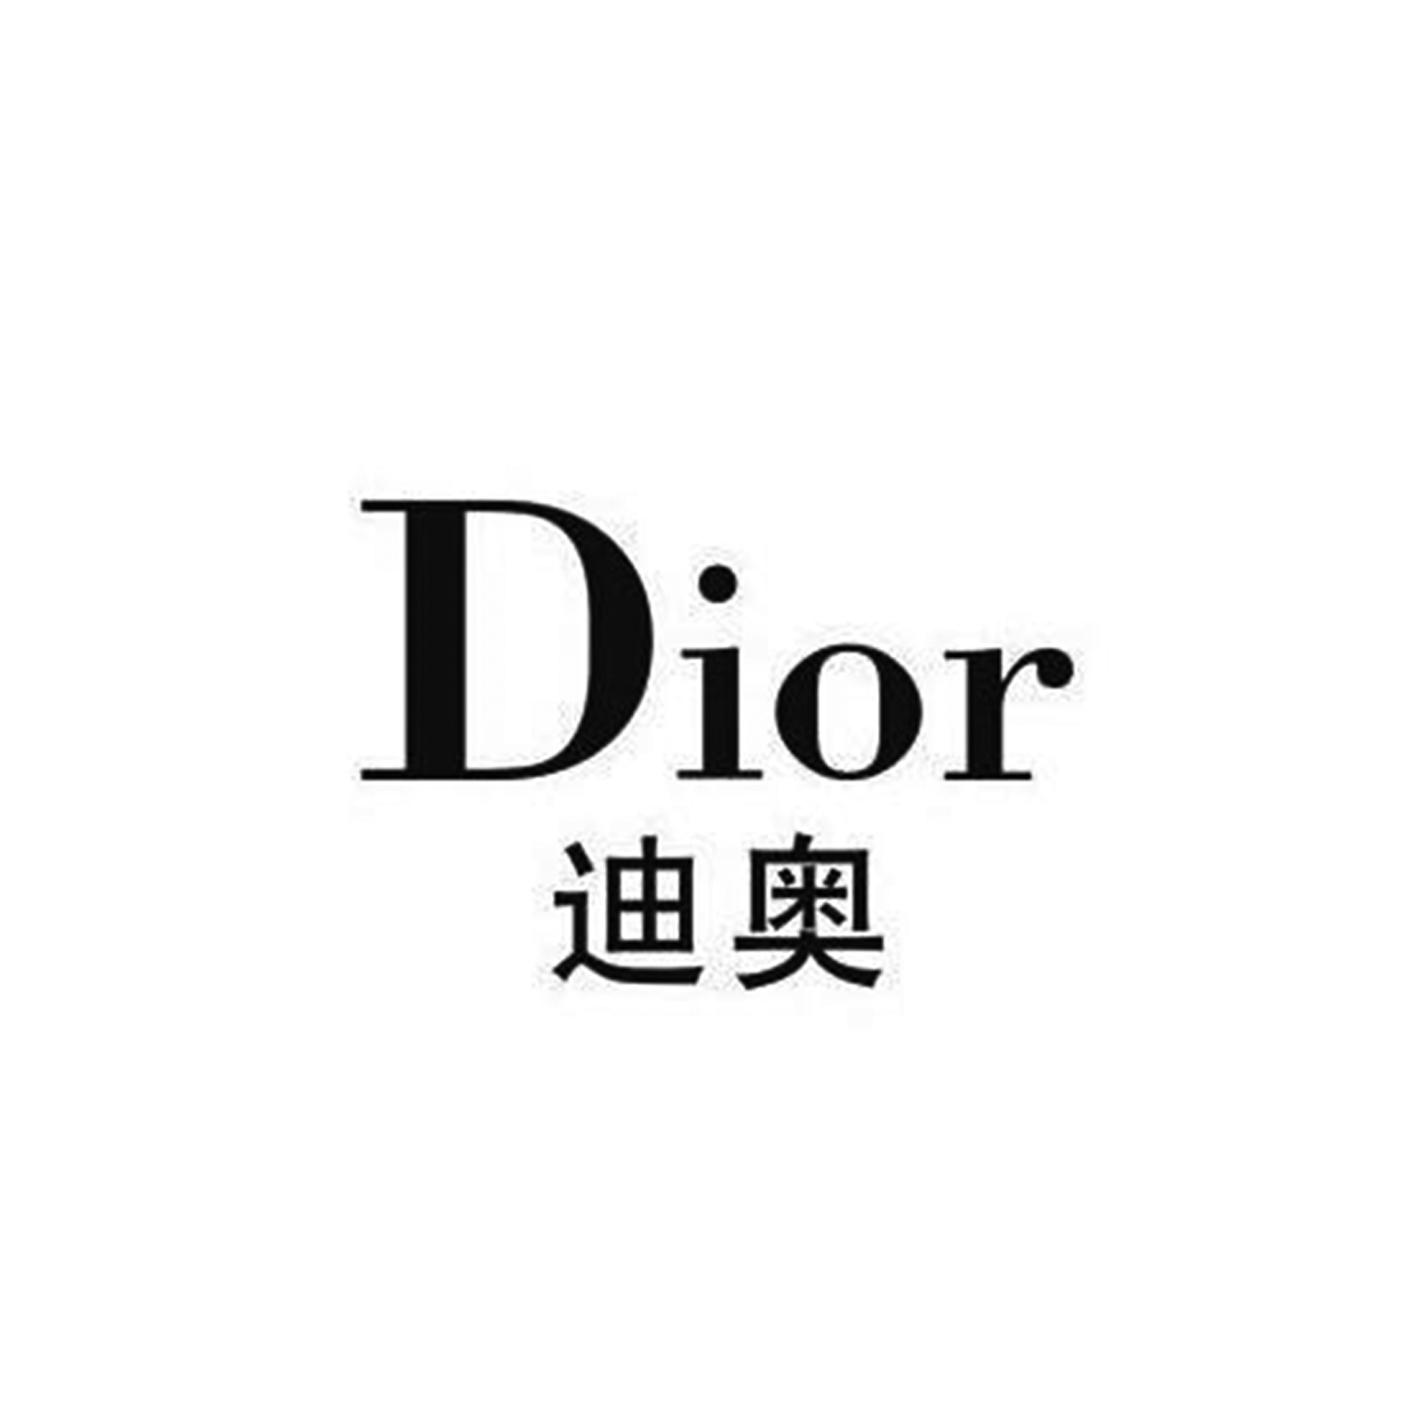 迪奥dior 商标公告